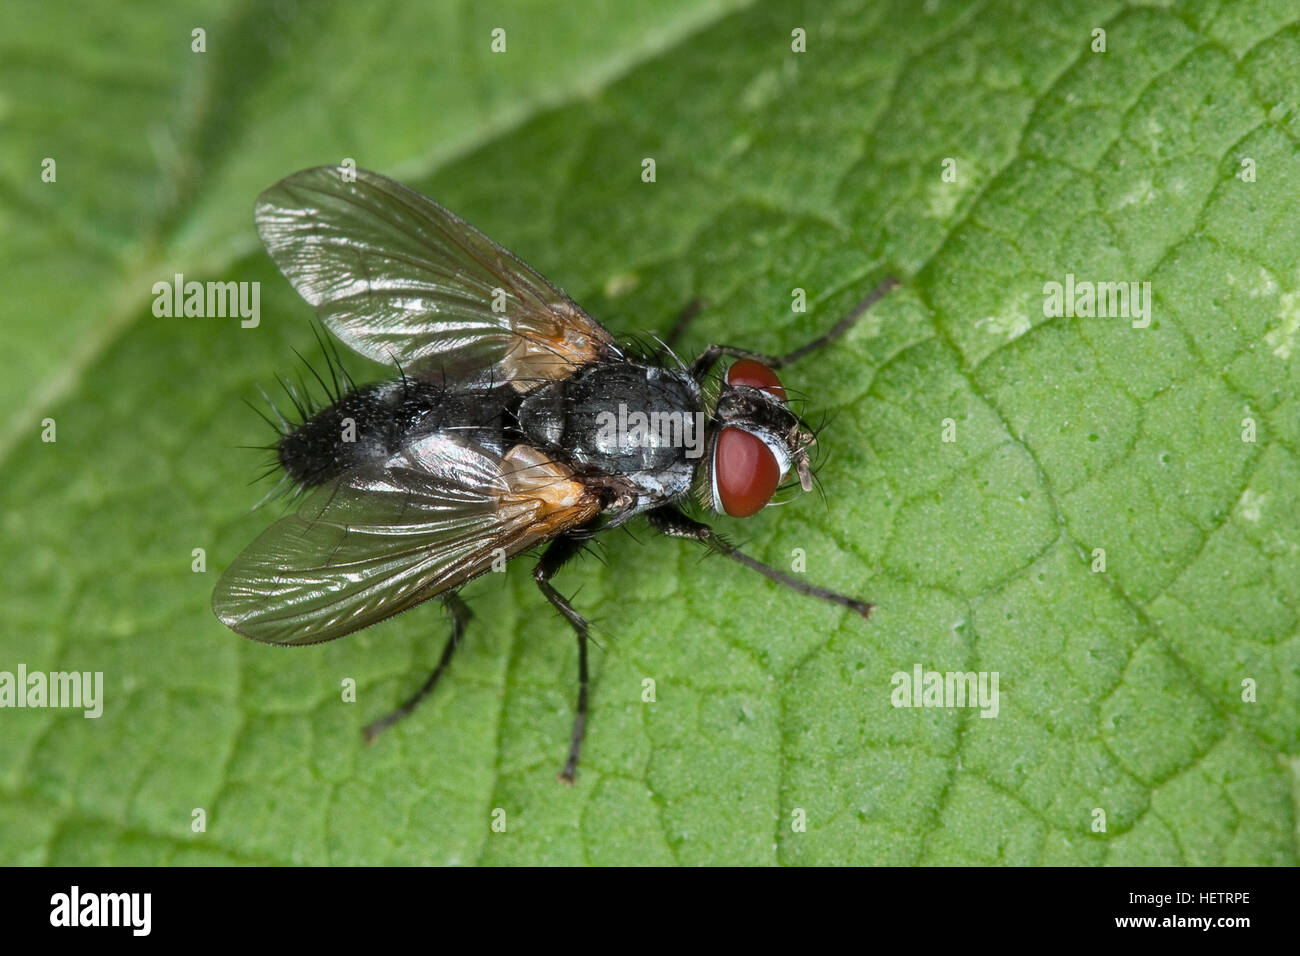 Raupenfliege, Tachinidae, Raupenfliegen, Schmarotzerfliegen, Tachinidae, tachinid fly, tachinids, parasitic flies, tachina flies Stock Photo